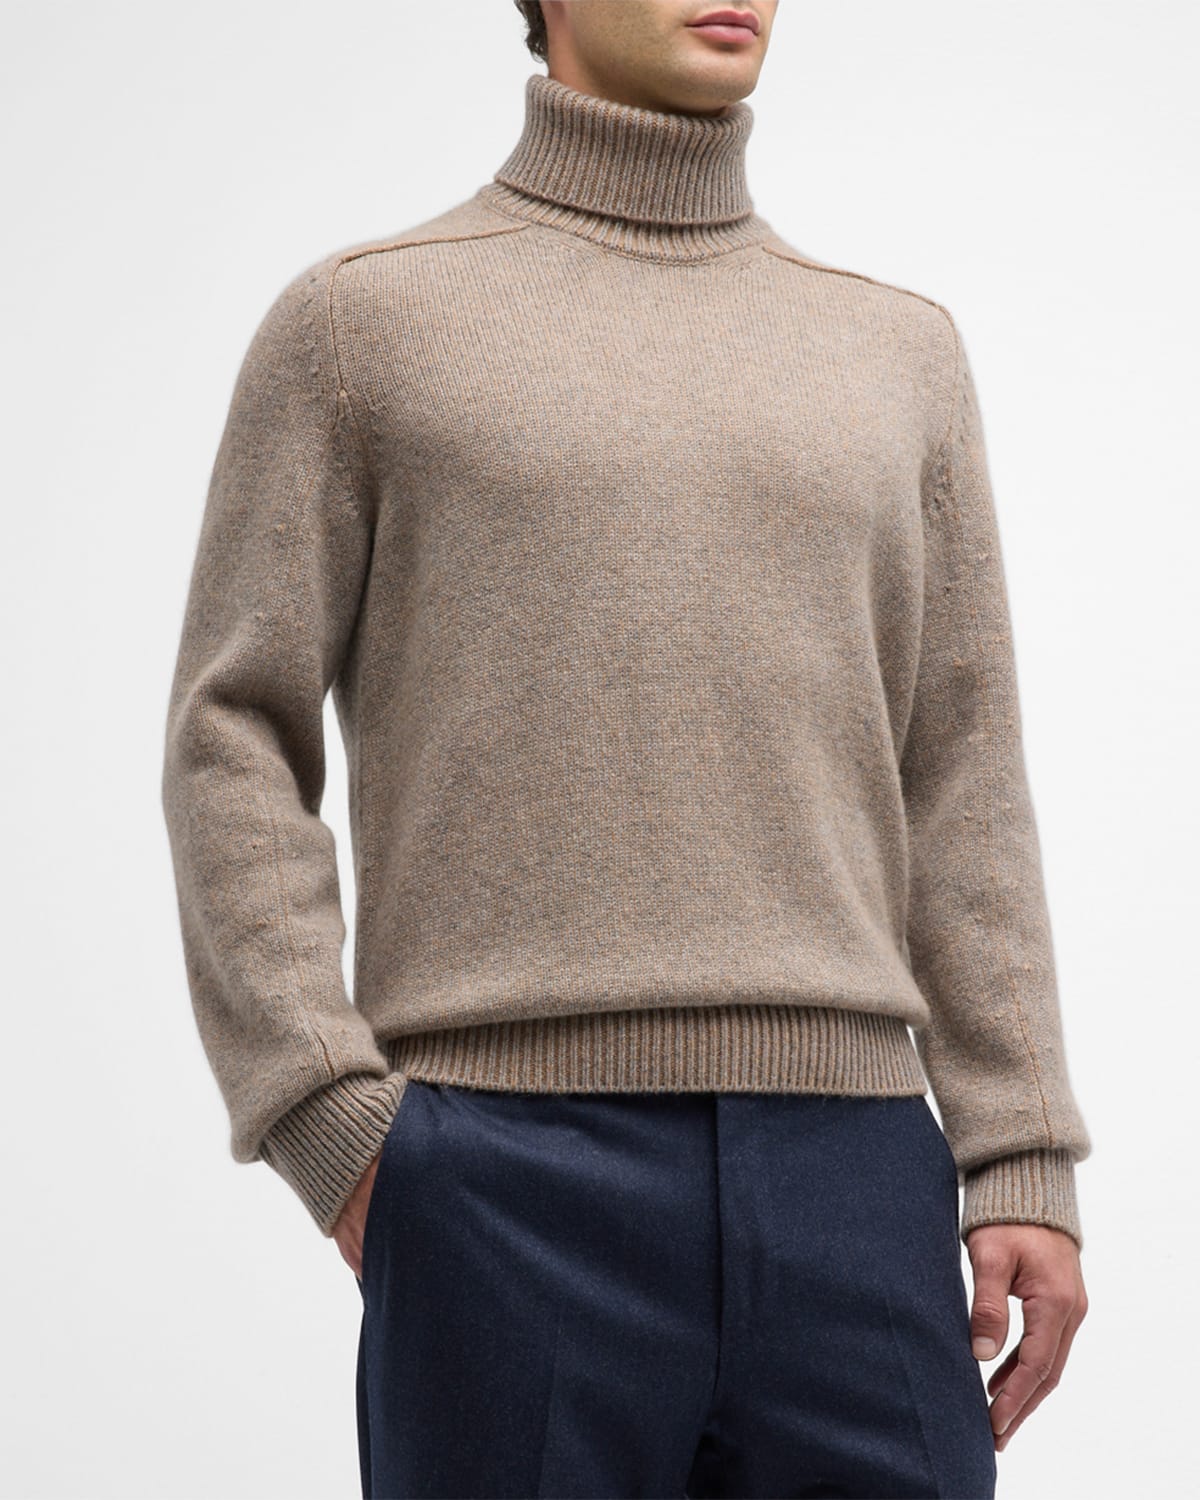 Men's Oasi Cashmere Knit Turtleneck Sweater